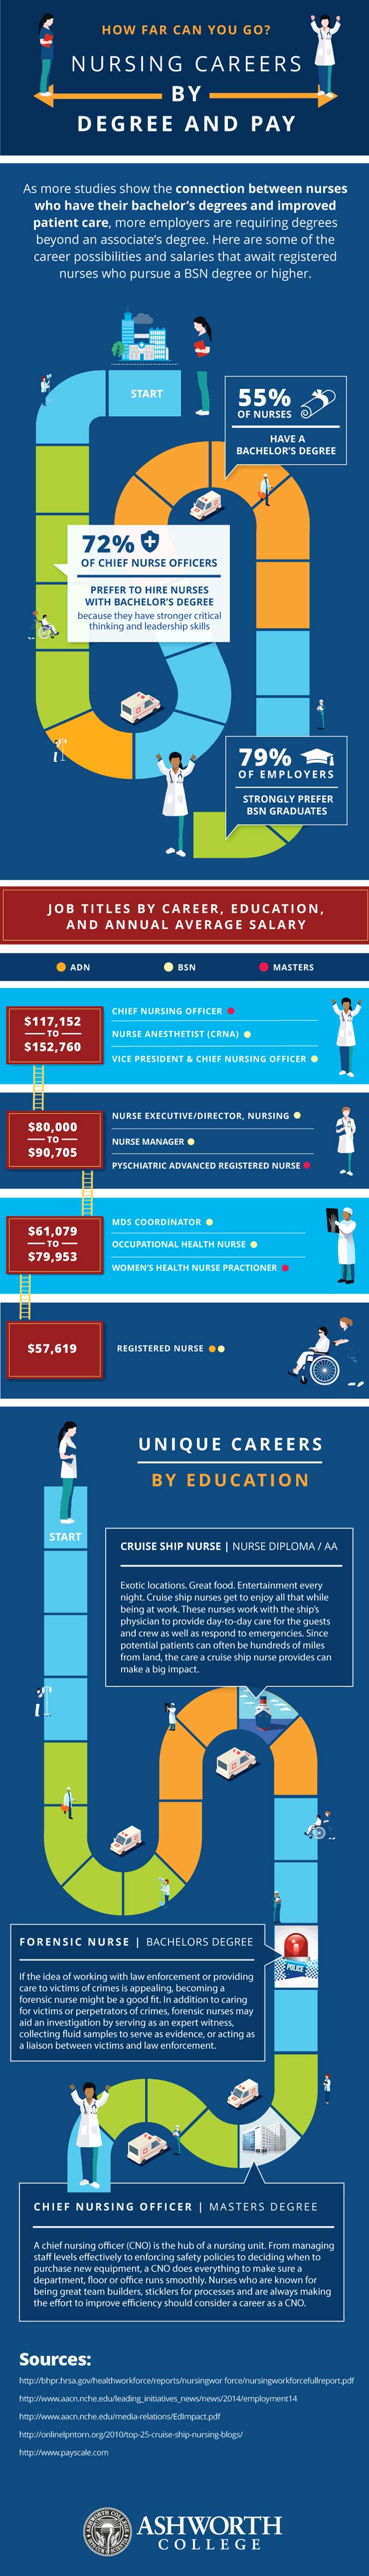 Nursing career paths infographic